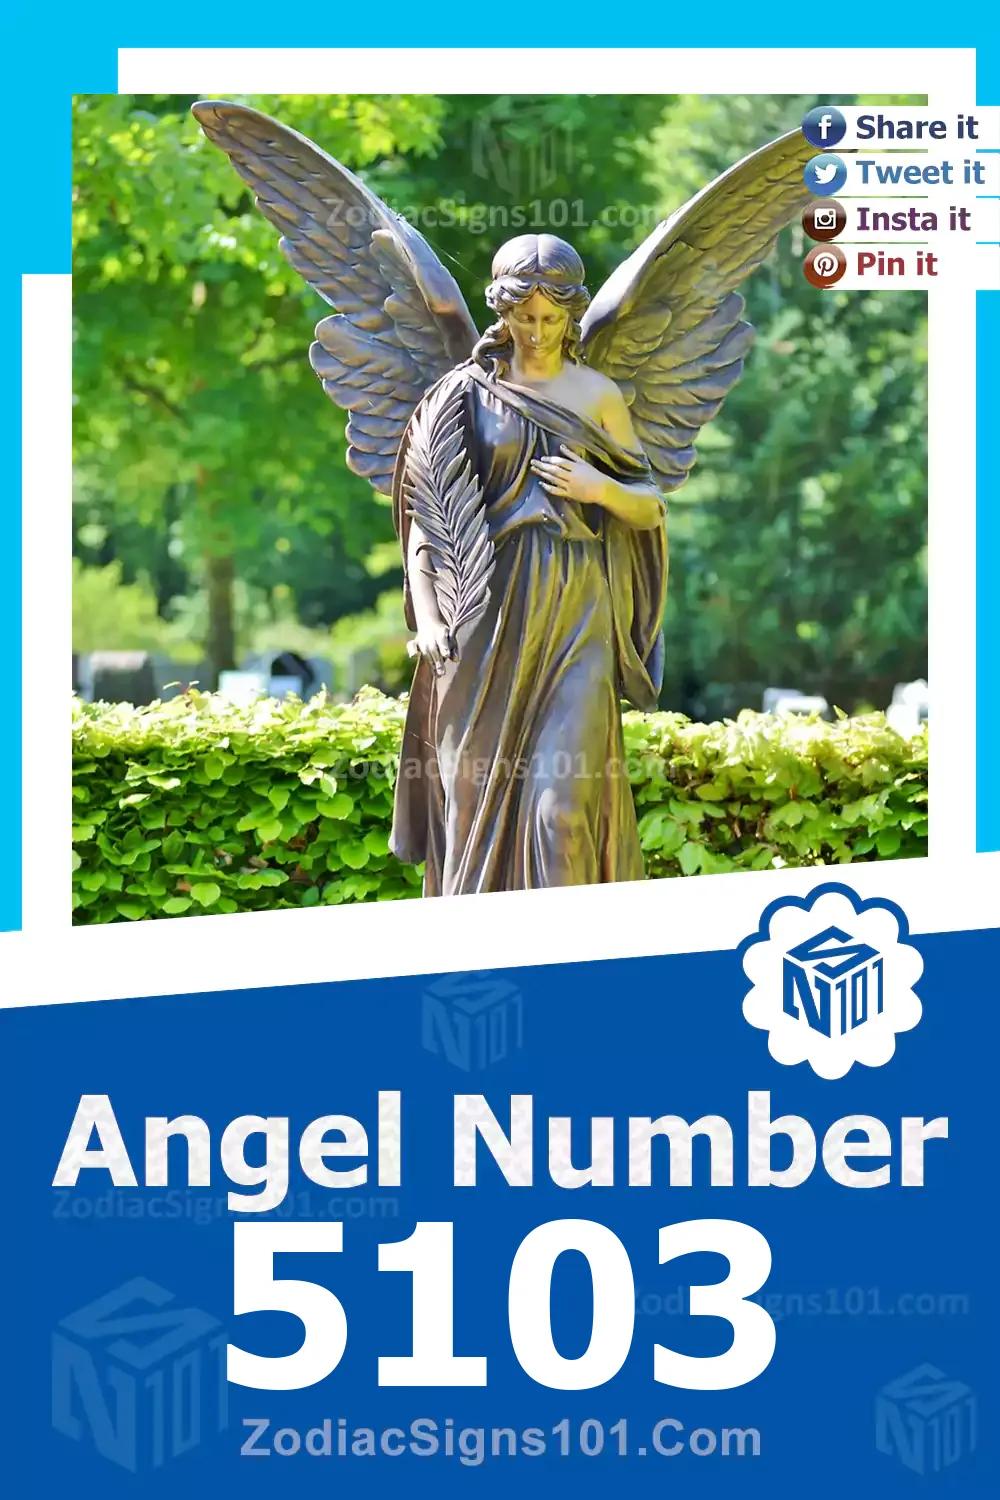 5103-Angel-Number-Meaning.jpg